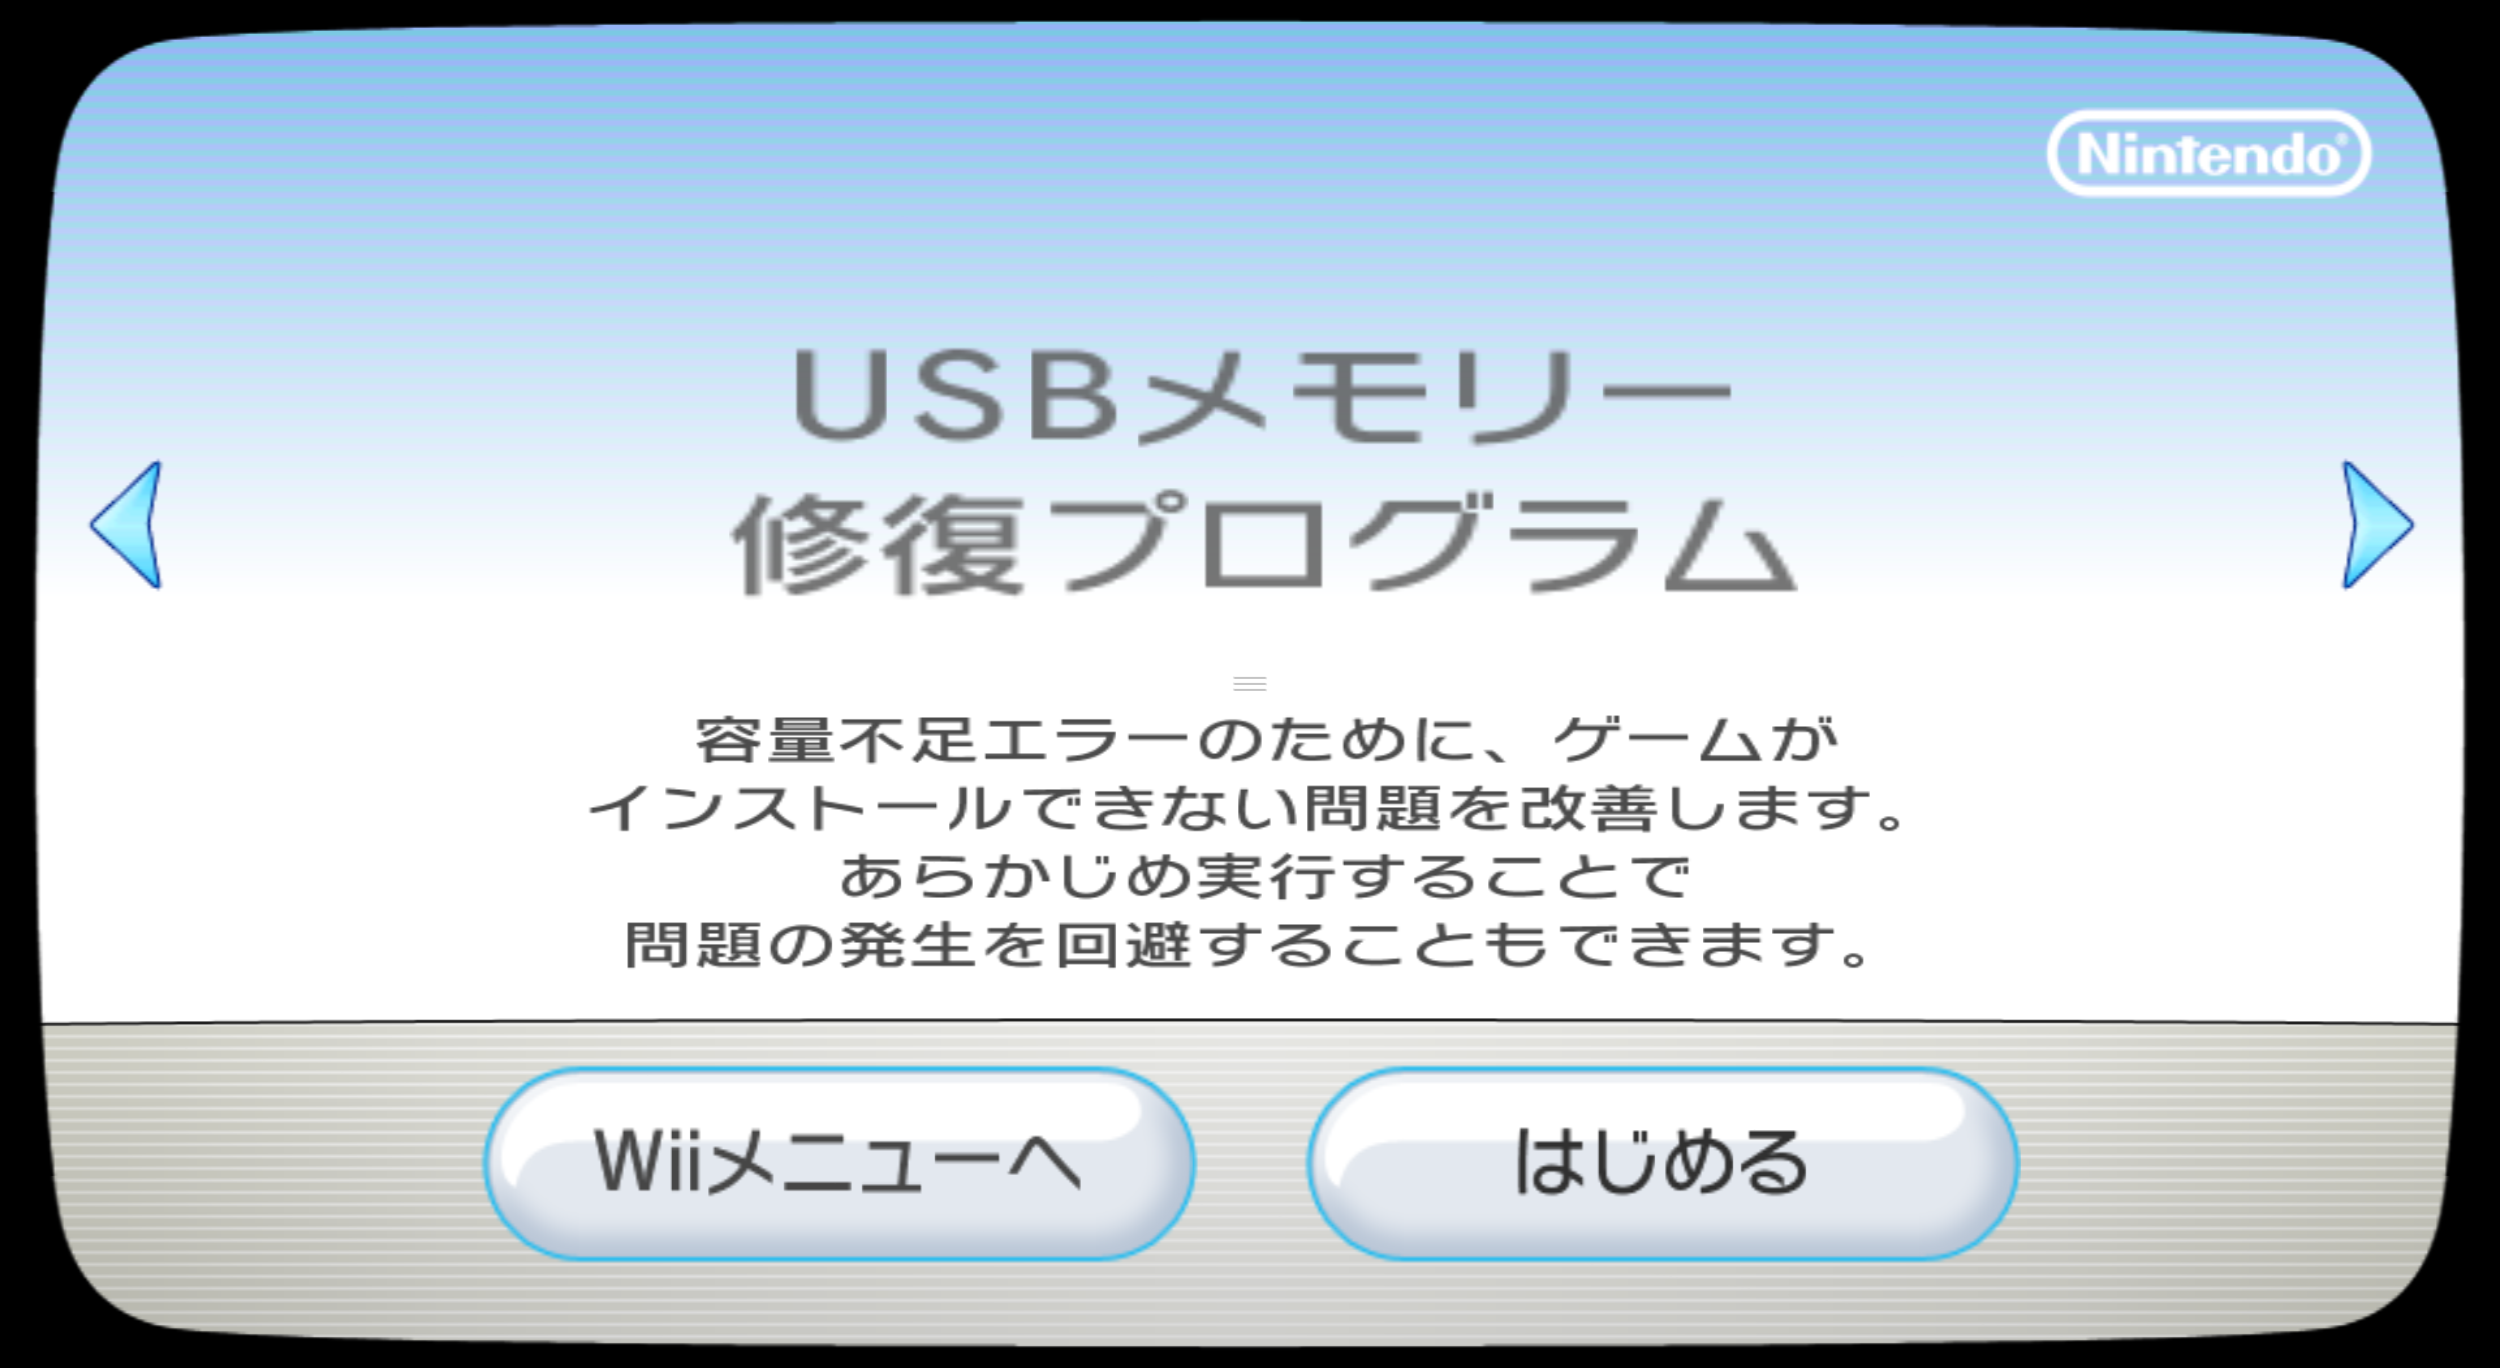 File Wii Usbflashoptimizationtitlescreen Png Dolphin Emulator Wiki